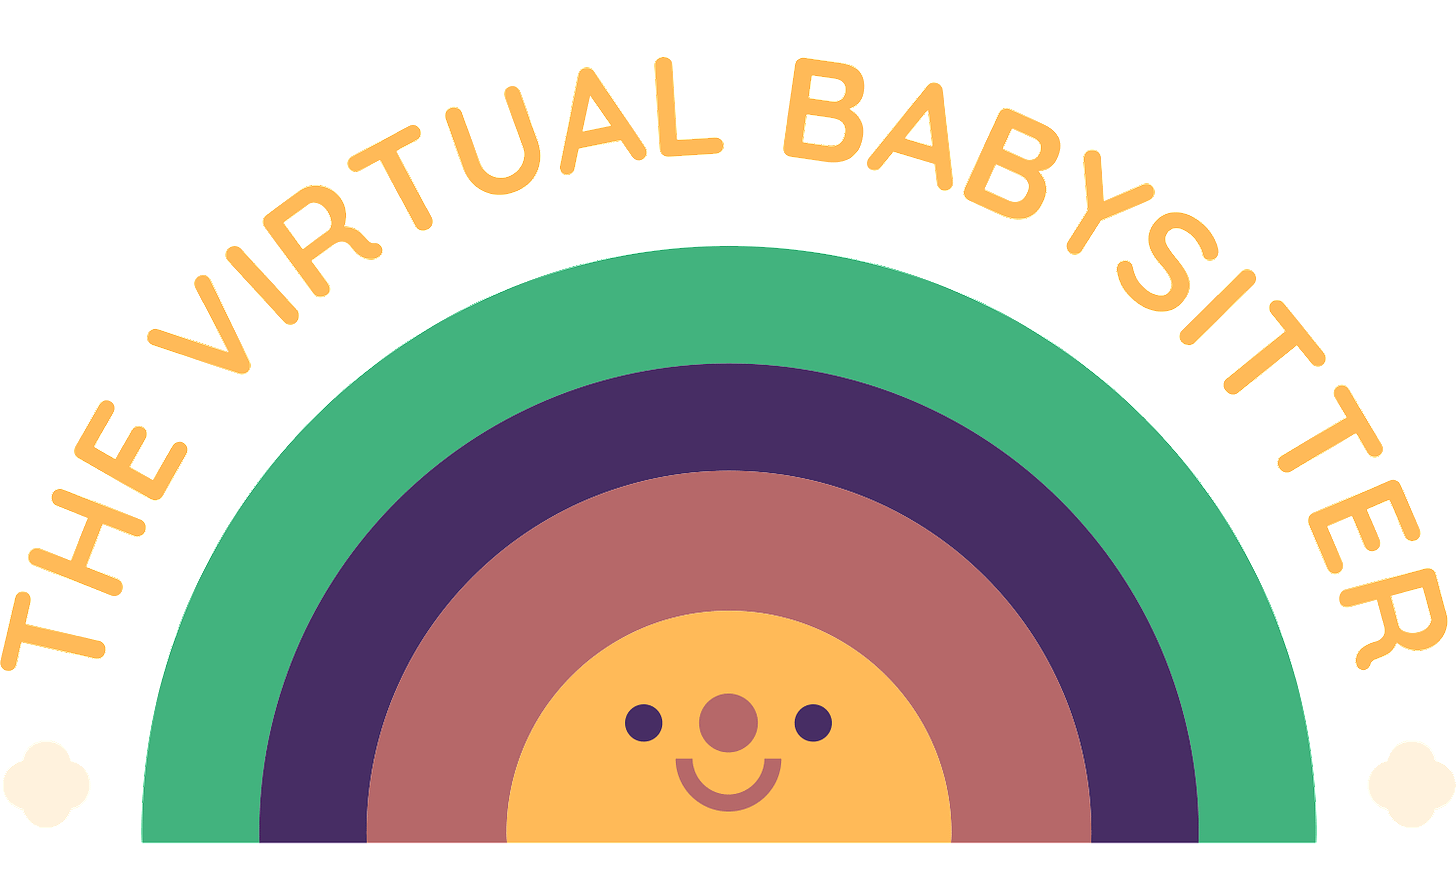 The Virtual Babysitter